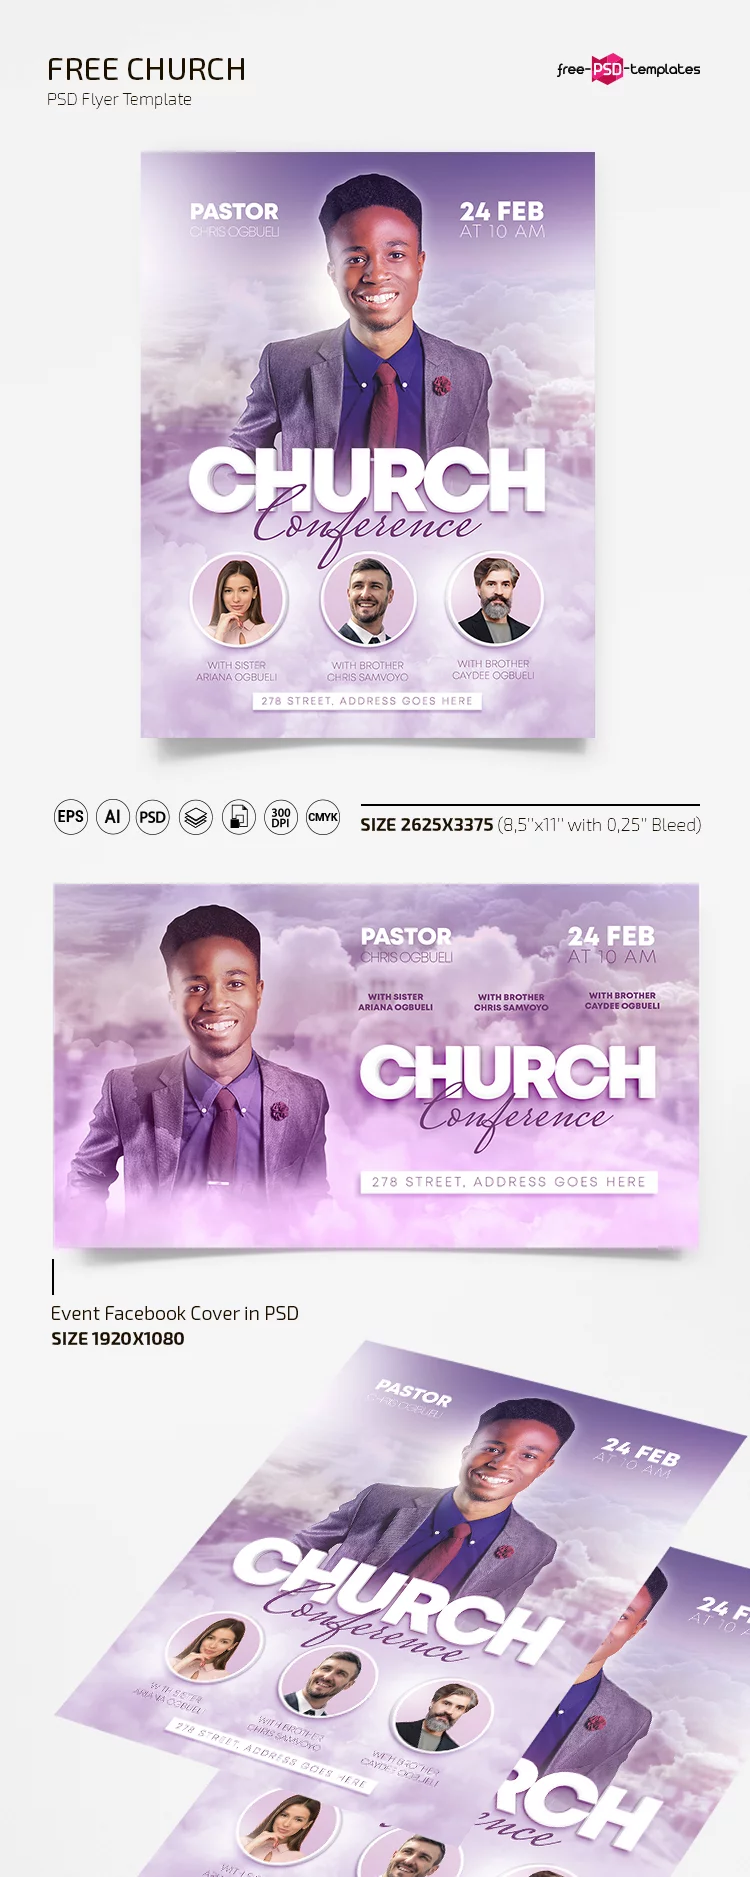 Free Church Flyer Templates in PSD + Vector (.ai+.eps)